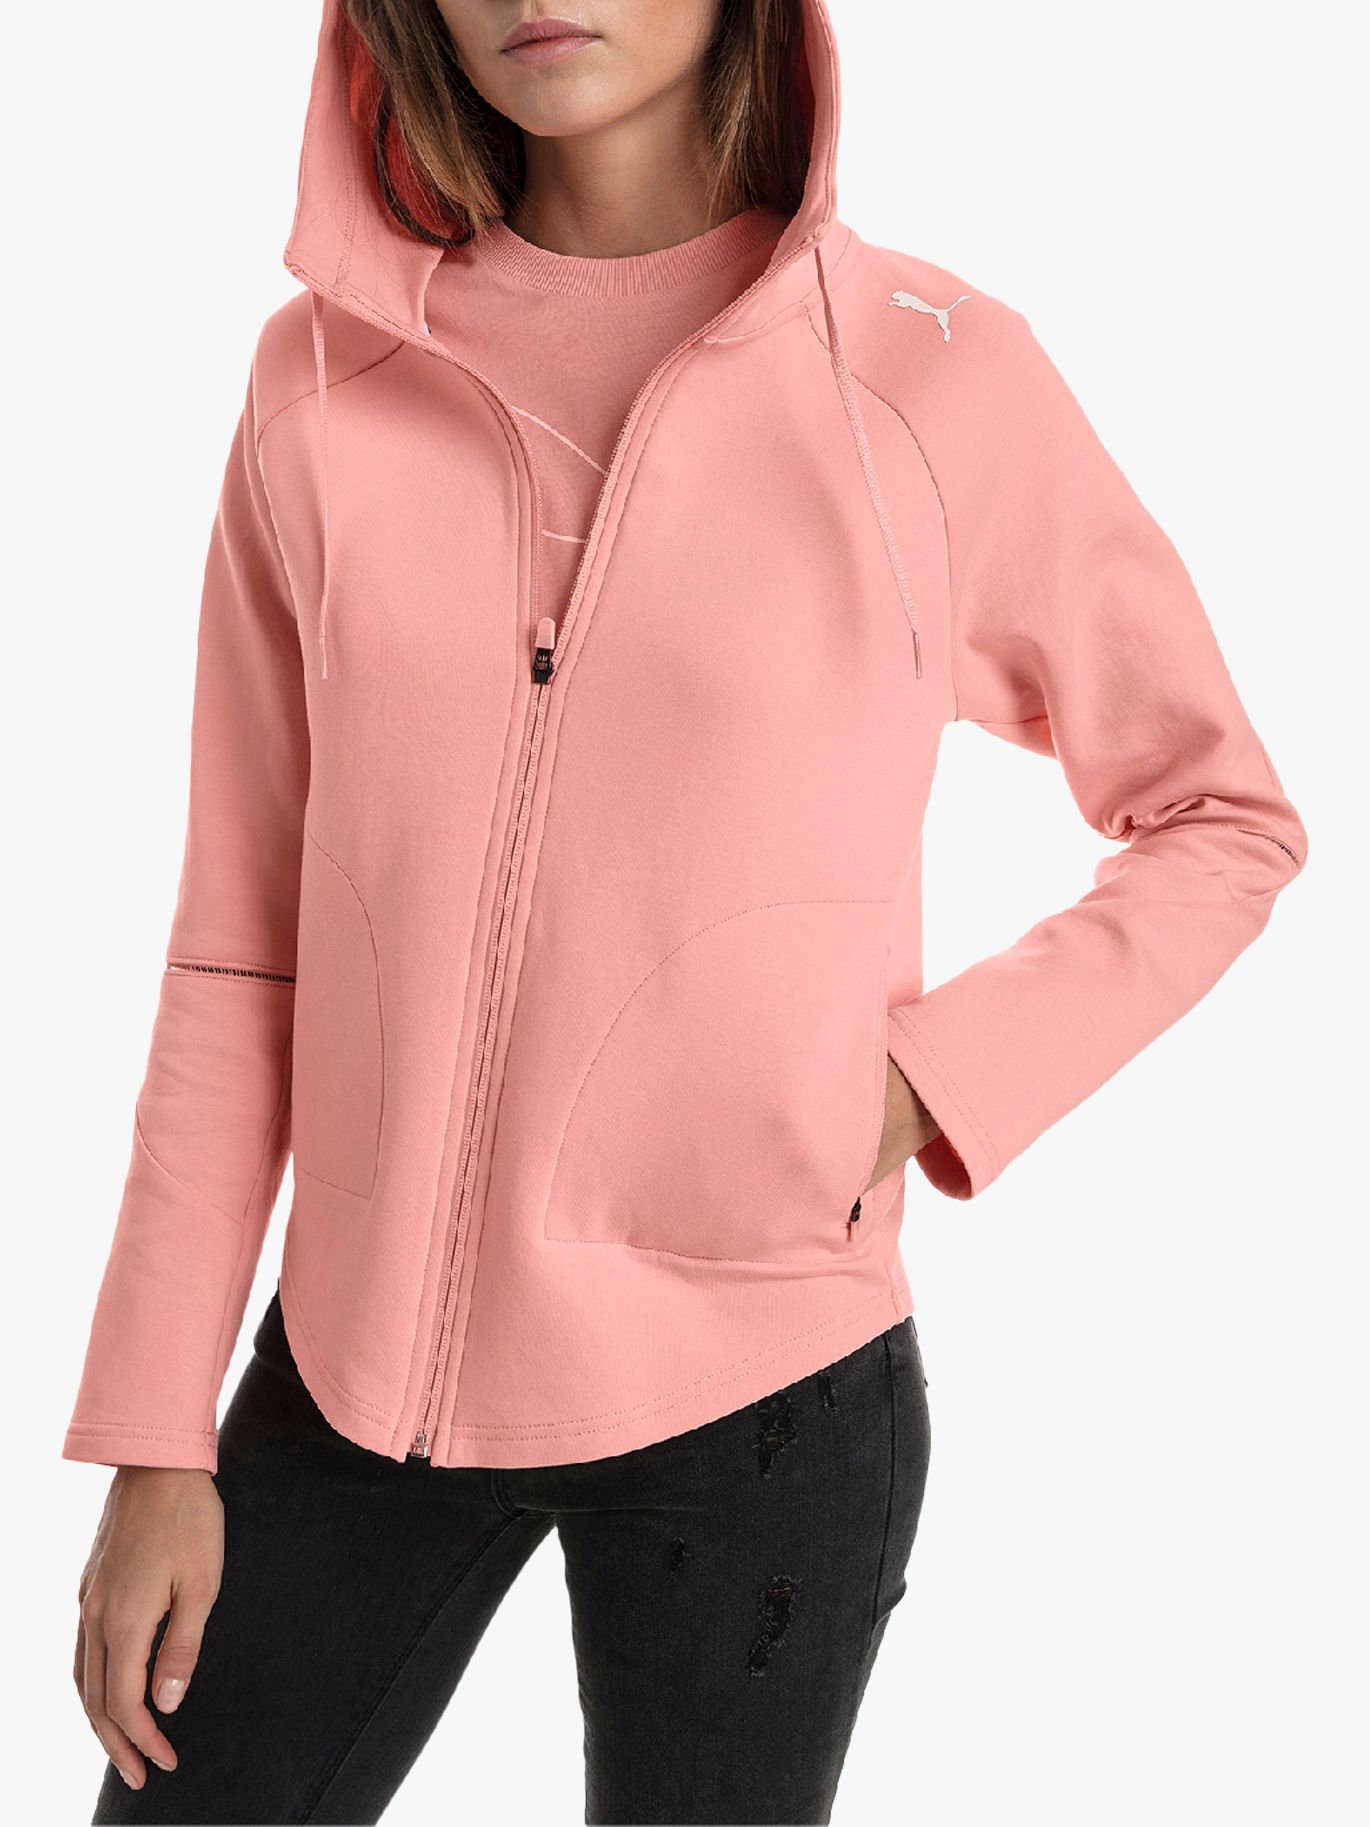 puma pink jacket